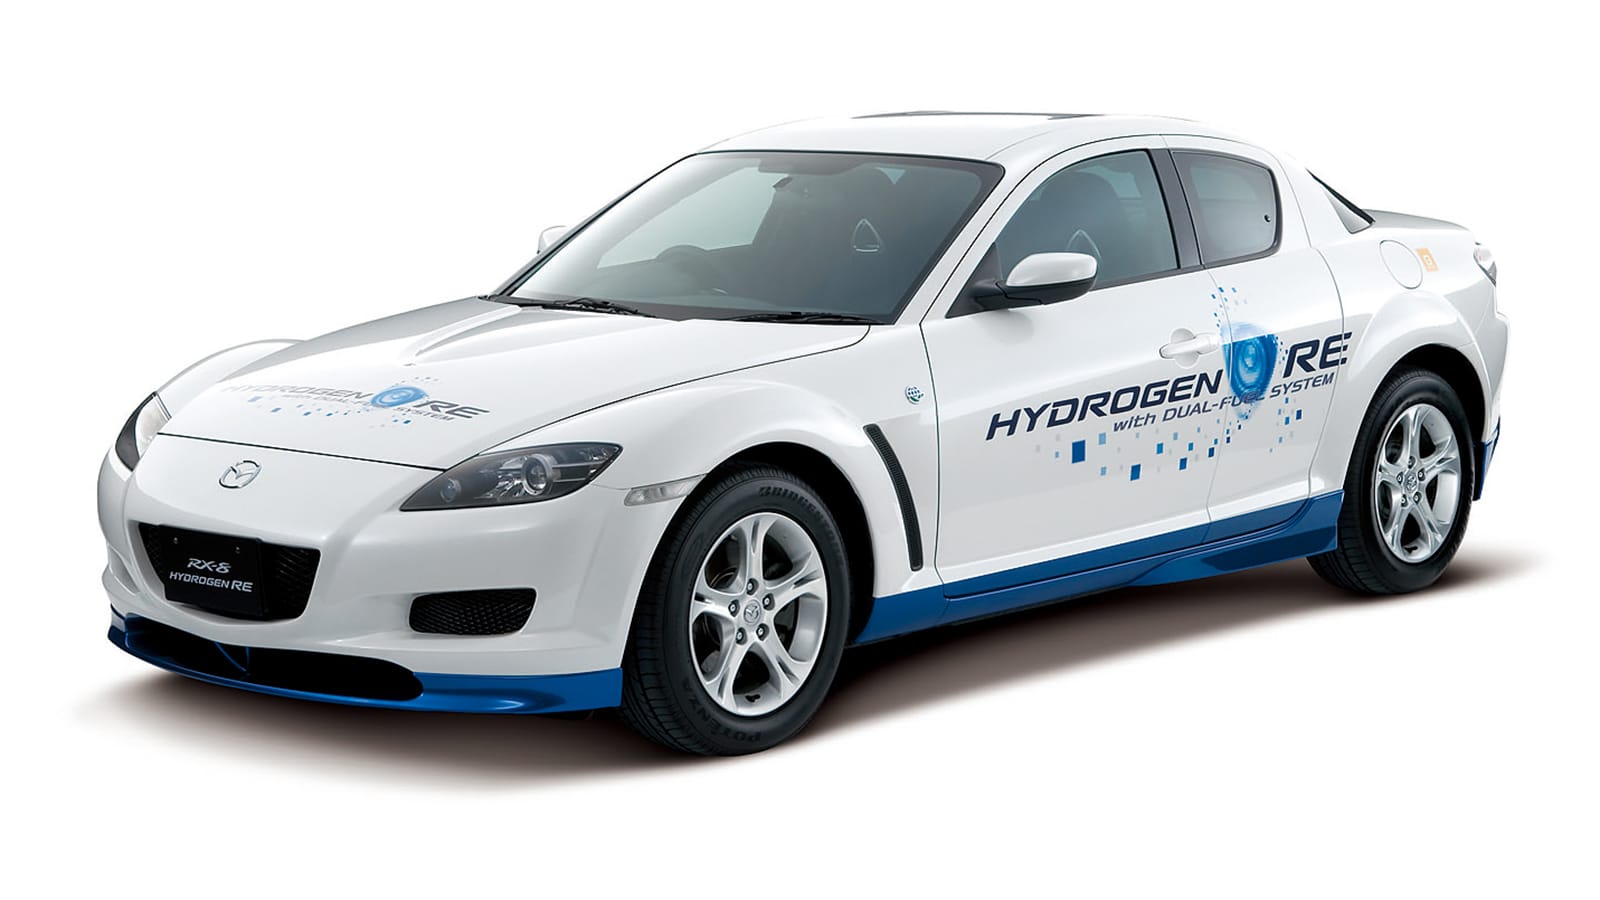 Hydrogen-powered Mazda RX-8